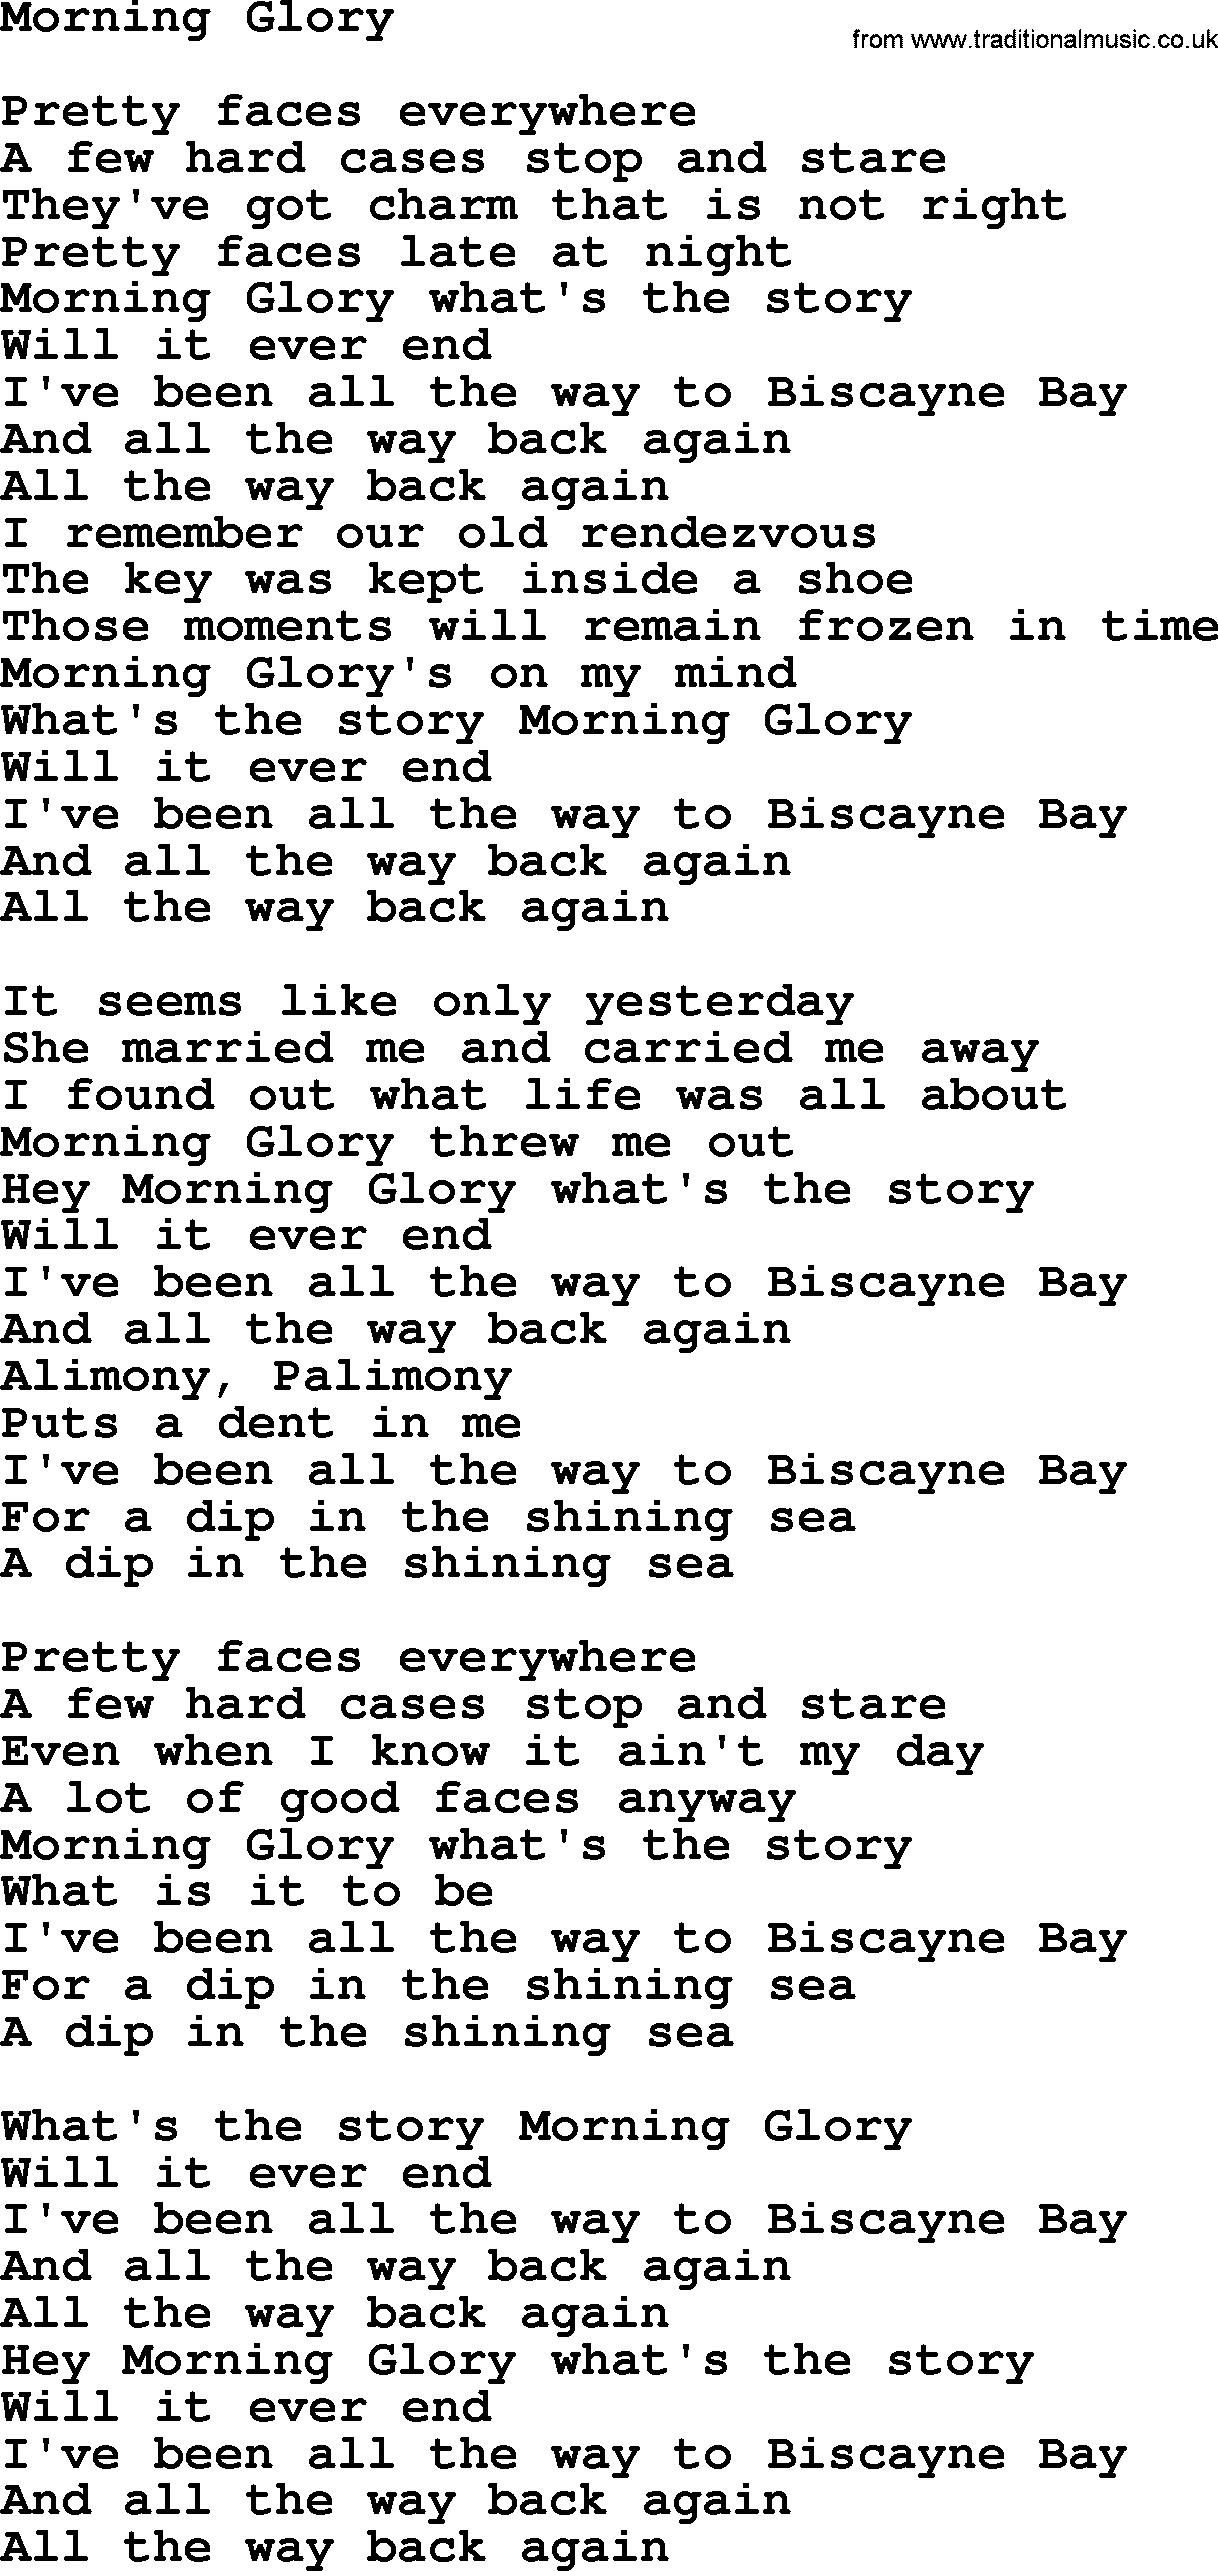 Gordon Lightfoot song Morning Glory, lyrics